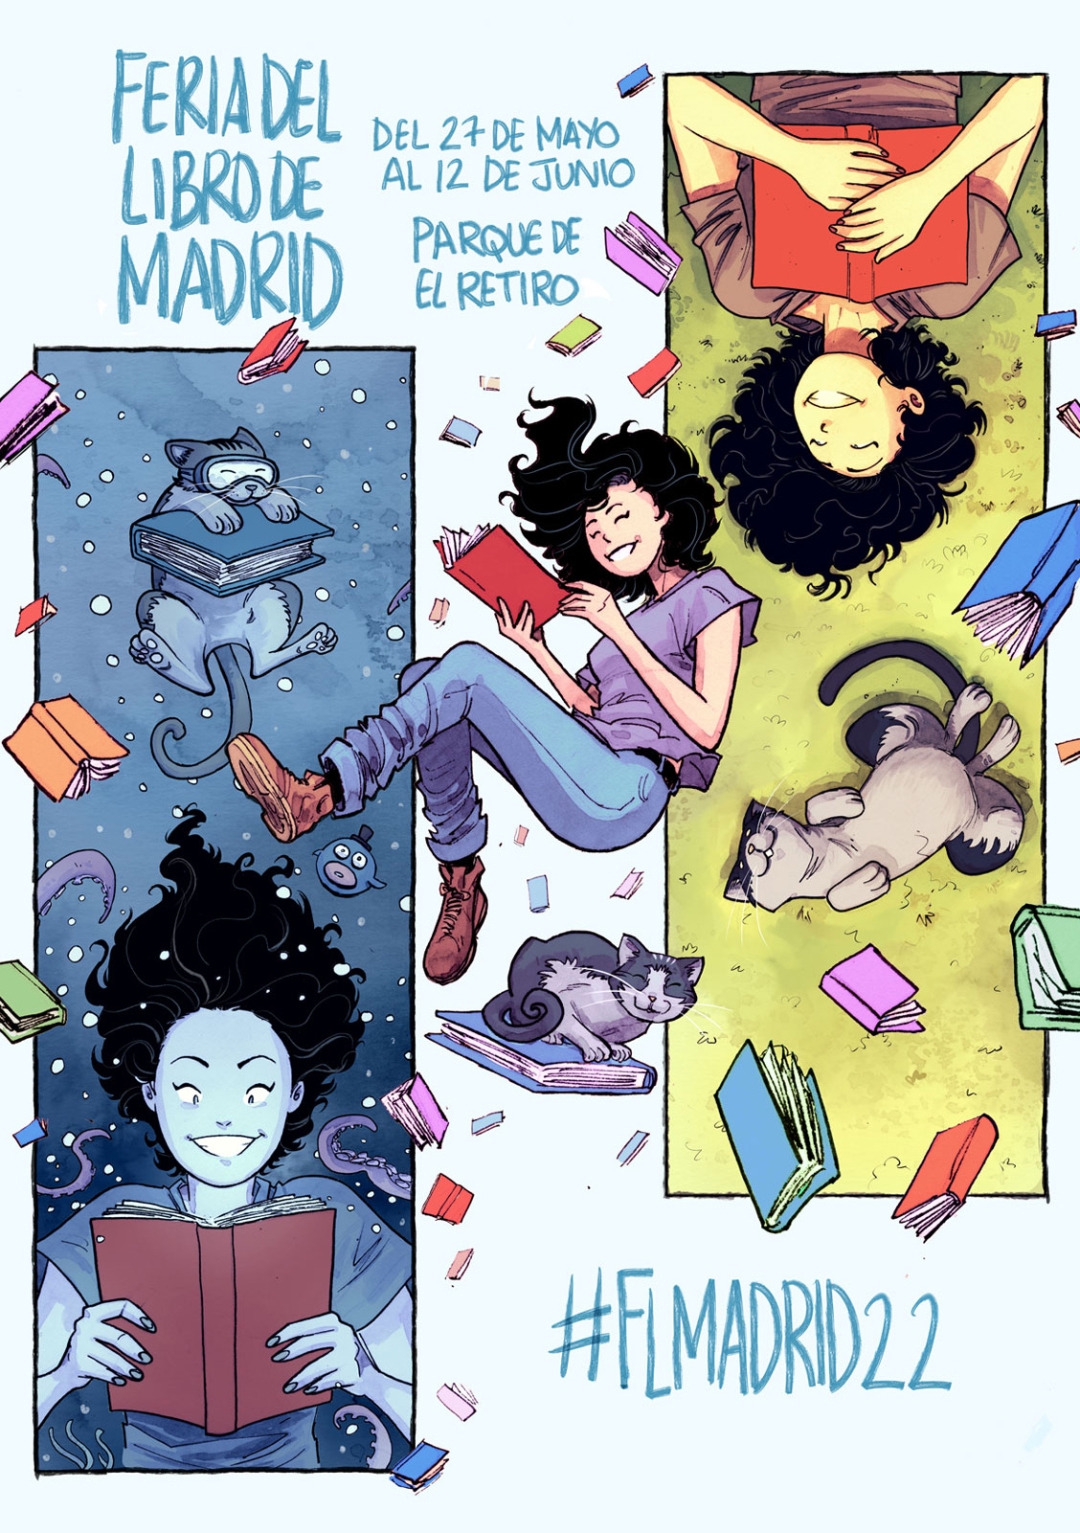 Poster Feria del Libro 2022. Author: Isaac Sánchez